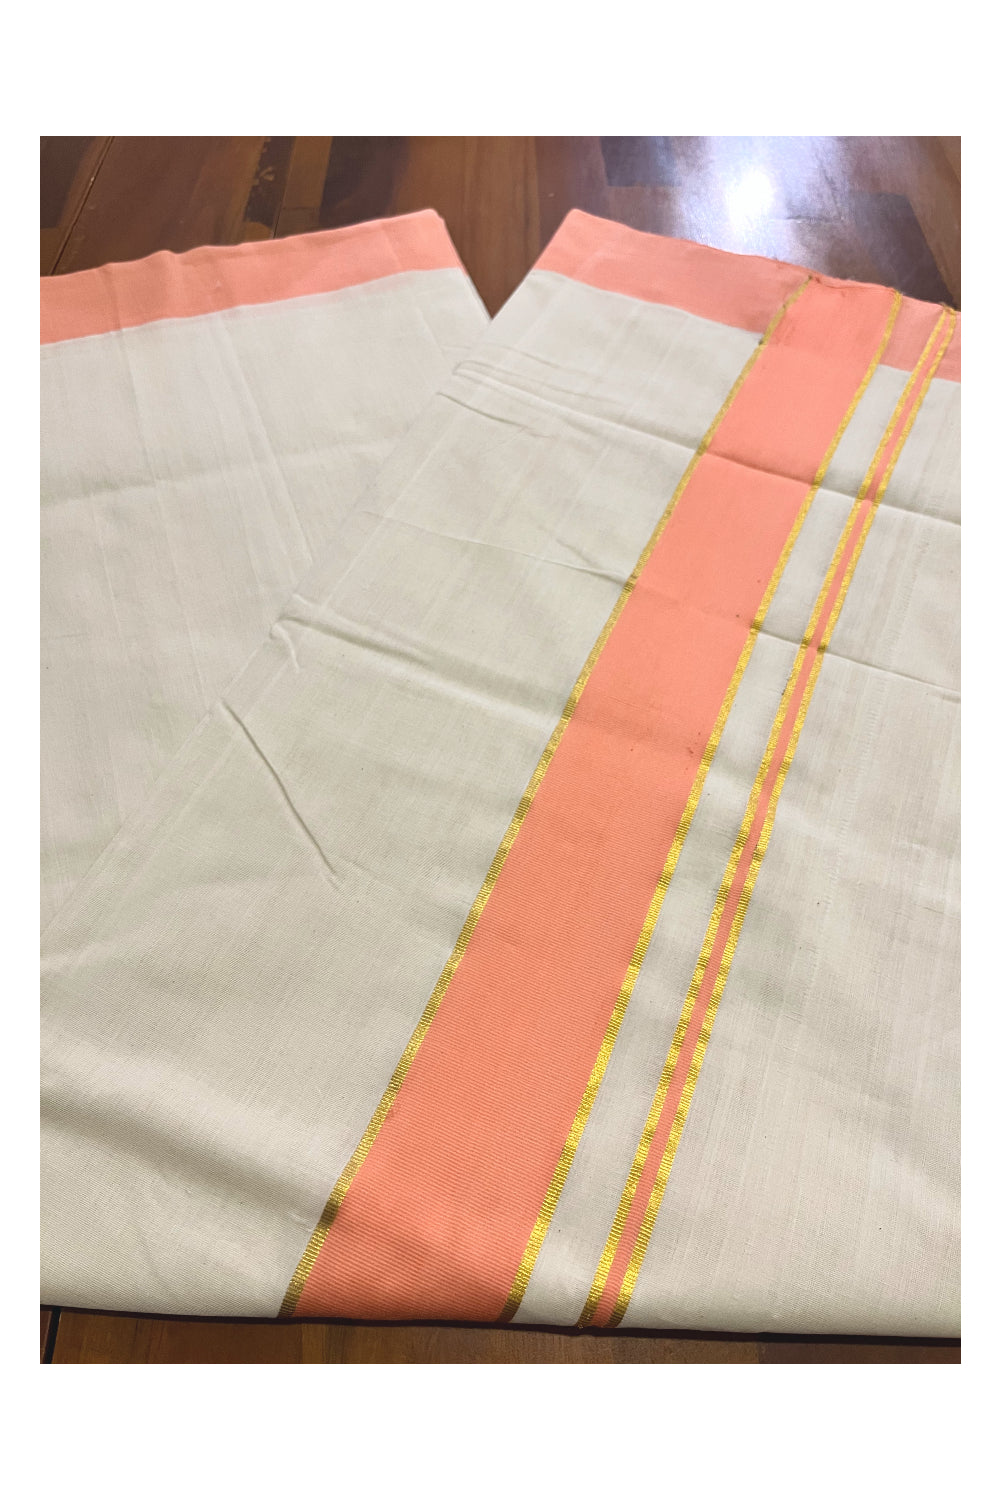 Southloom Premium Balaramapuram Unakkupaavu Handloom Cotton Saree with Kasavu and Peach Border